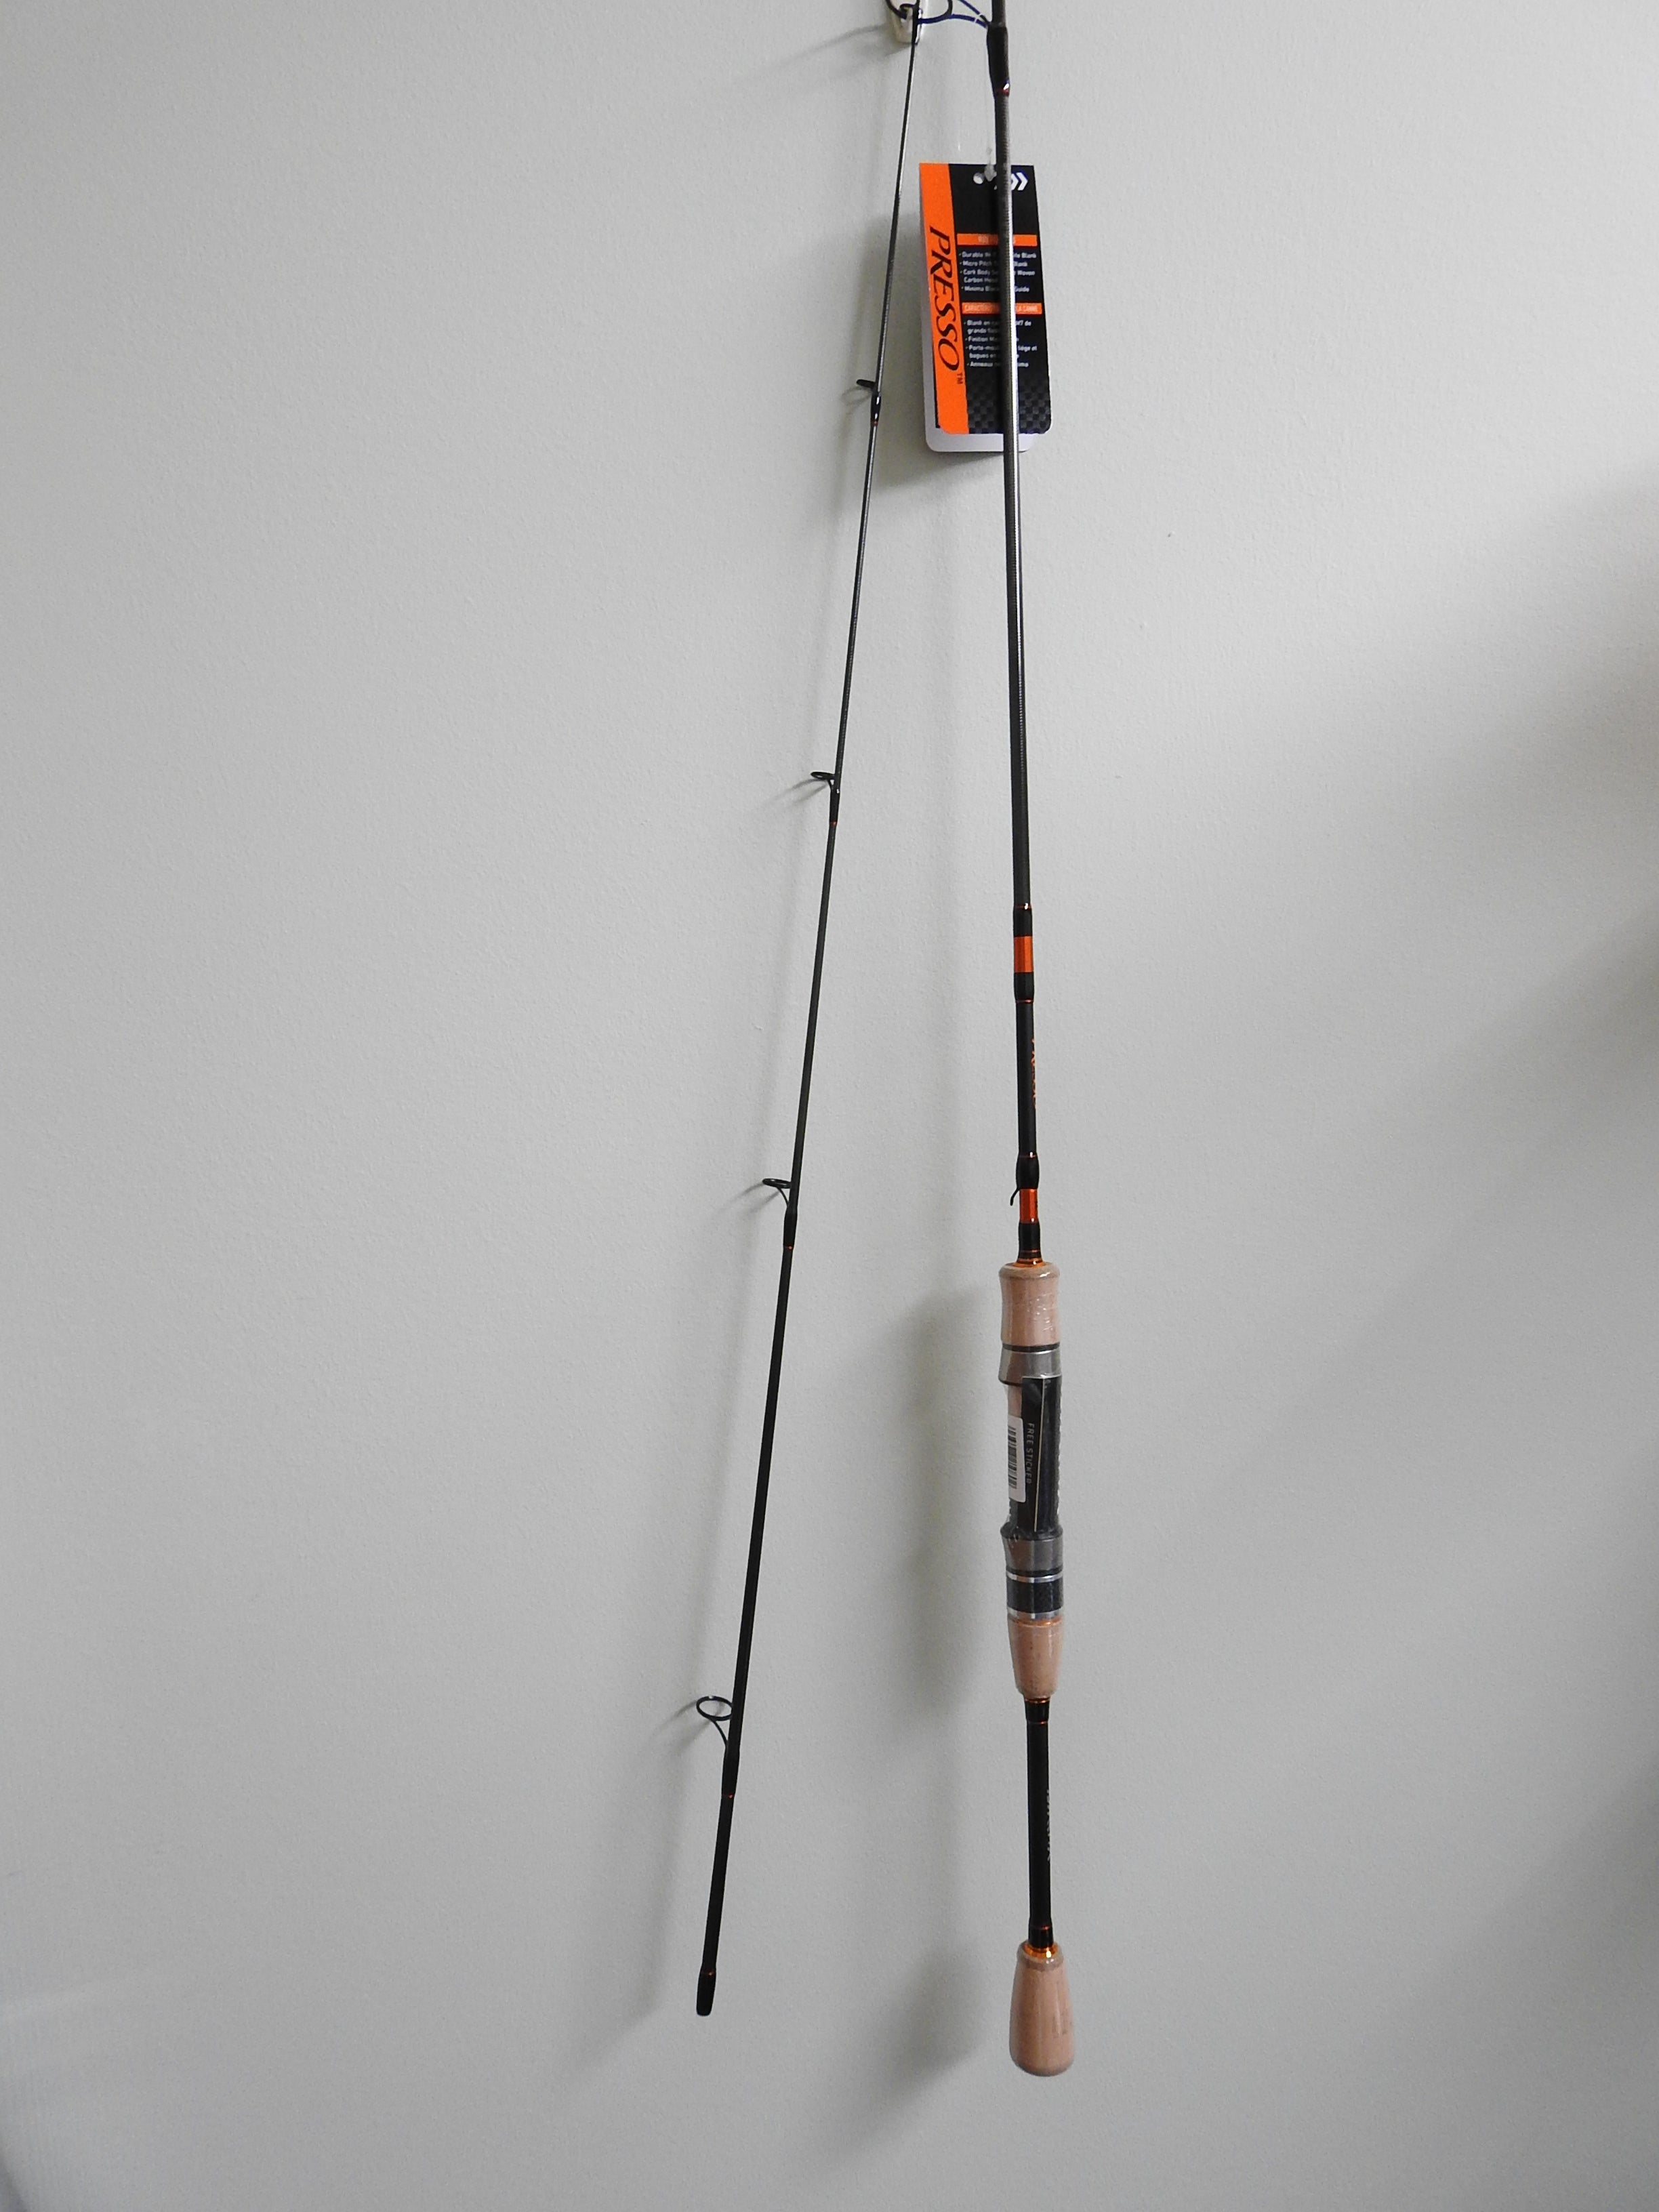 Daiwa Presso Spinning Rod - 6'6 / Ultralight / 2